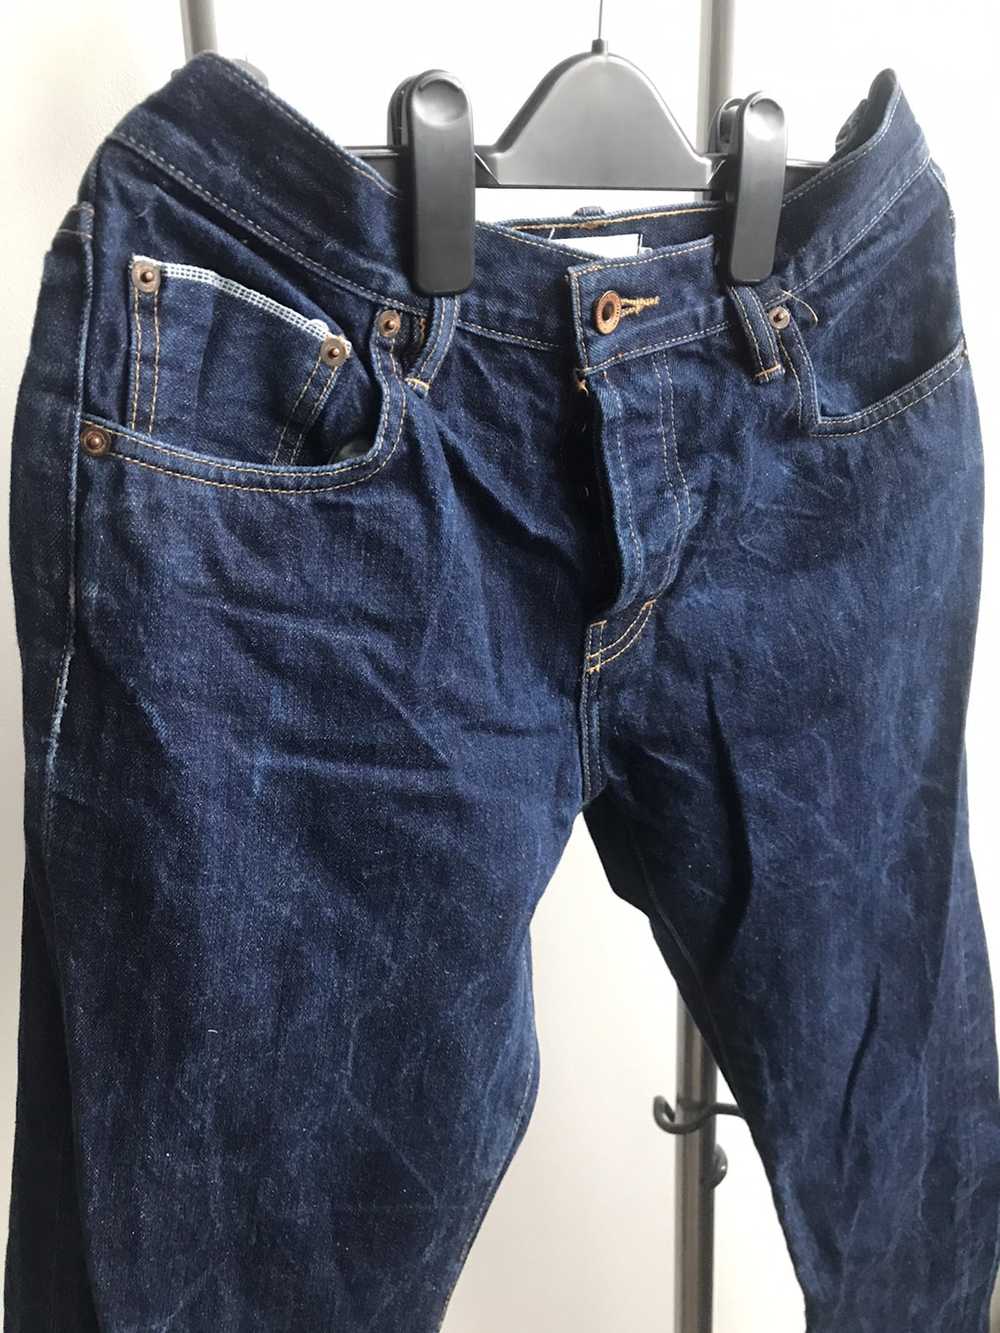 Taylor Stitch Selvedge Denim Jeans 30x32 - image 3